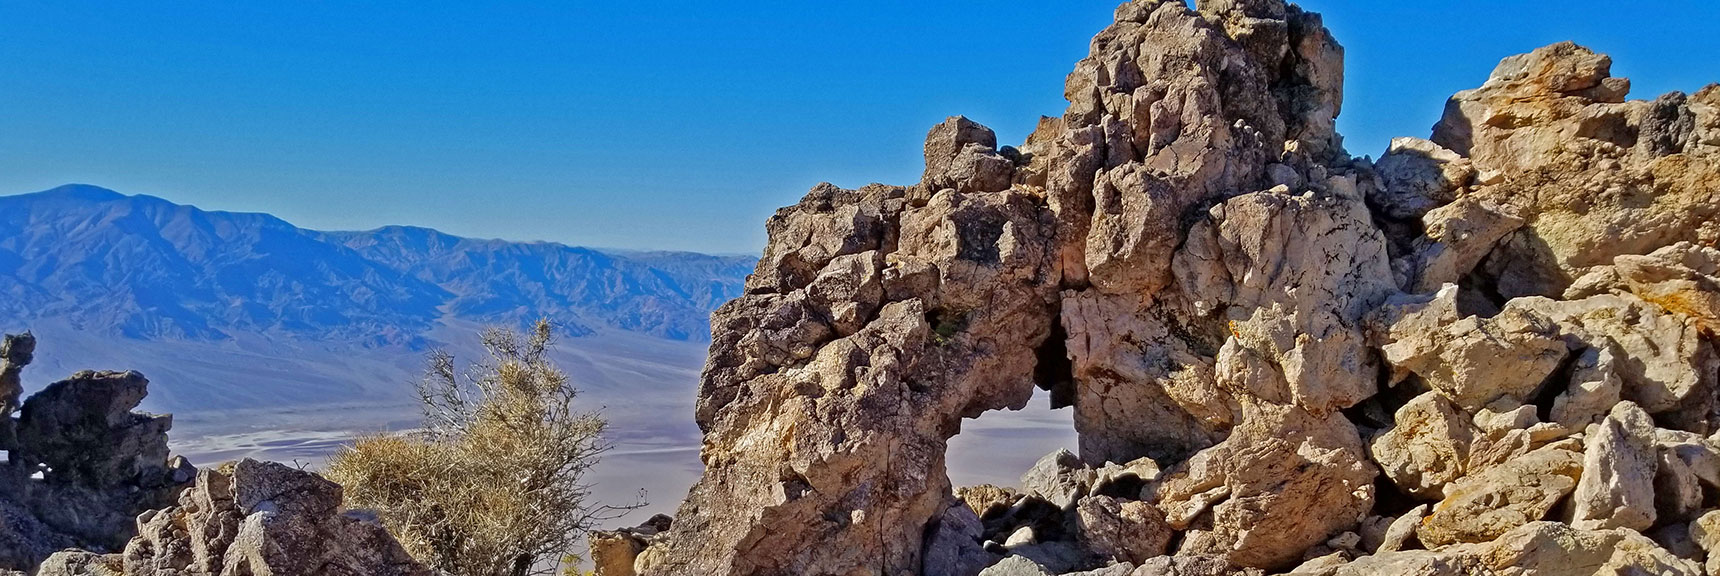 Unique Natural Rock Sculptures on Dante's Ridge | Dante's View to Mt. Perry | Death Valley National Park, CA